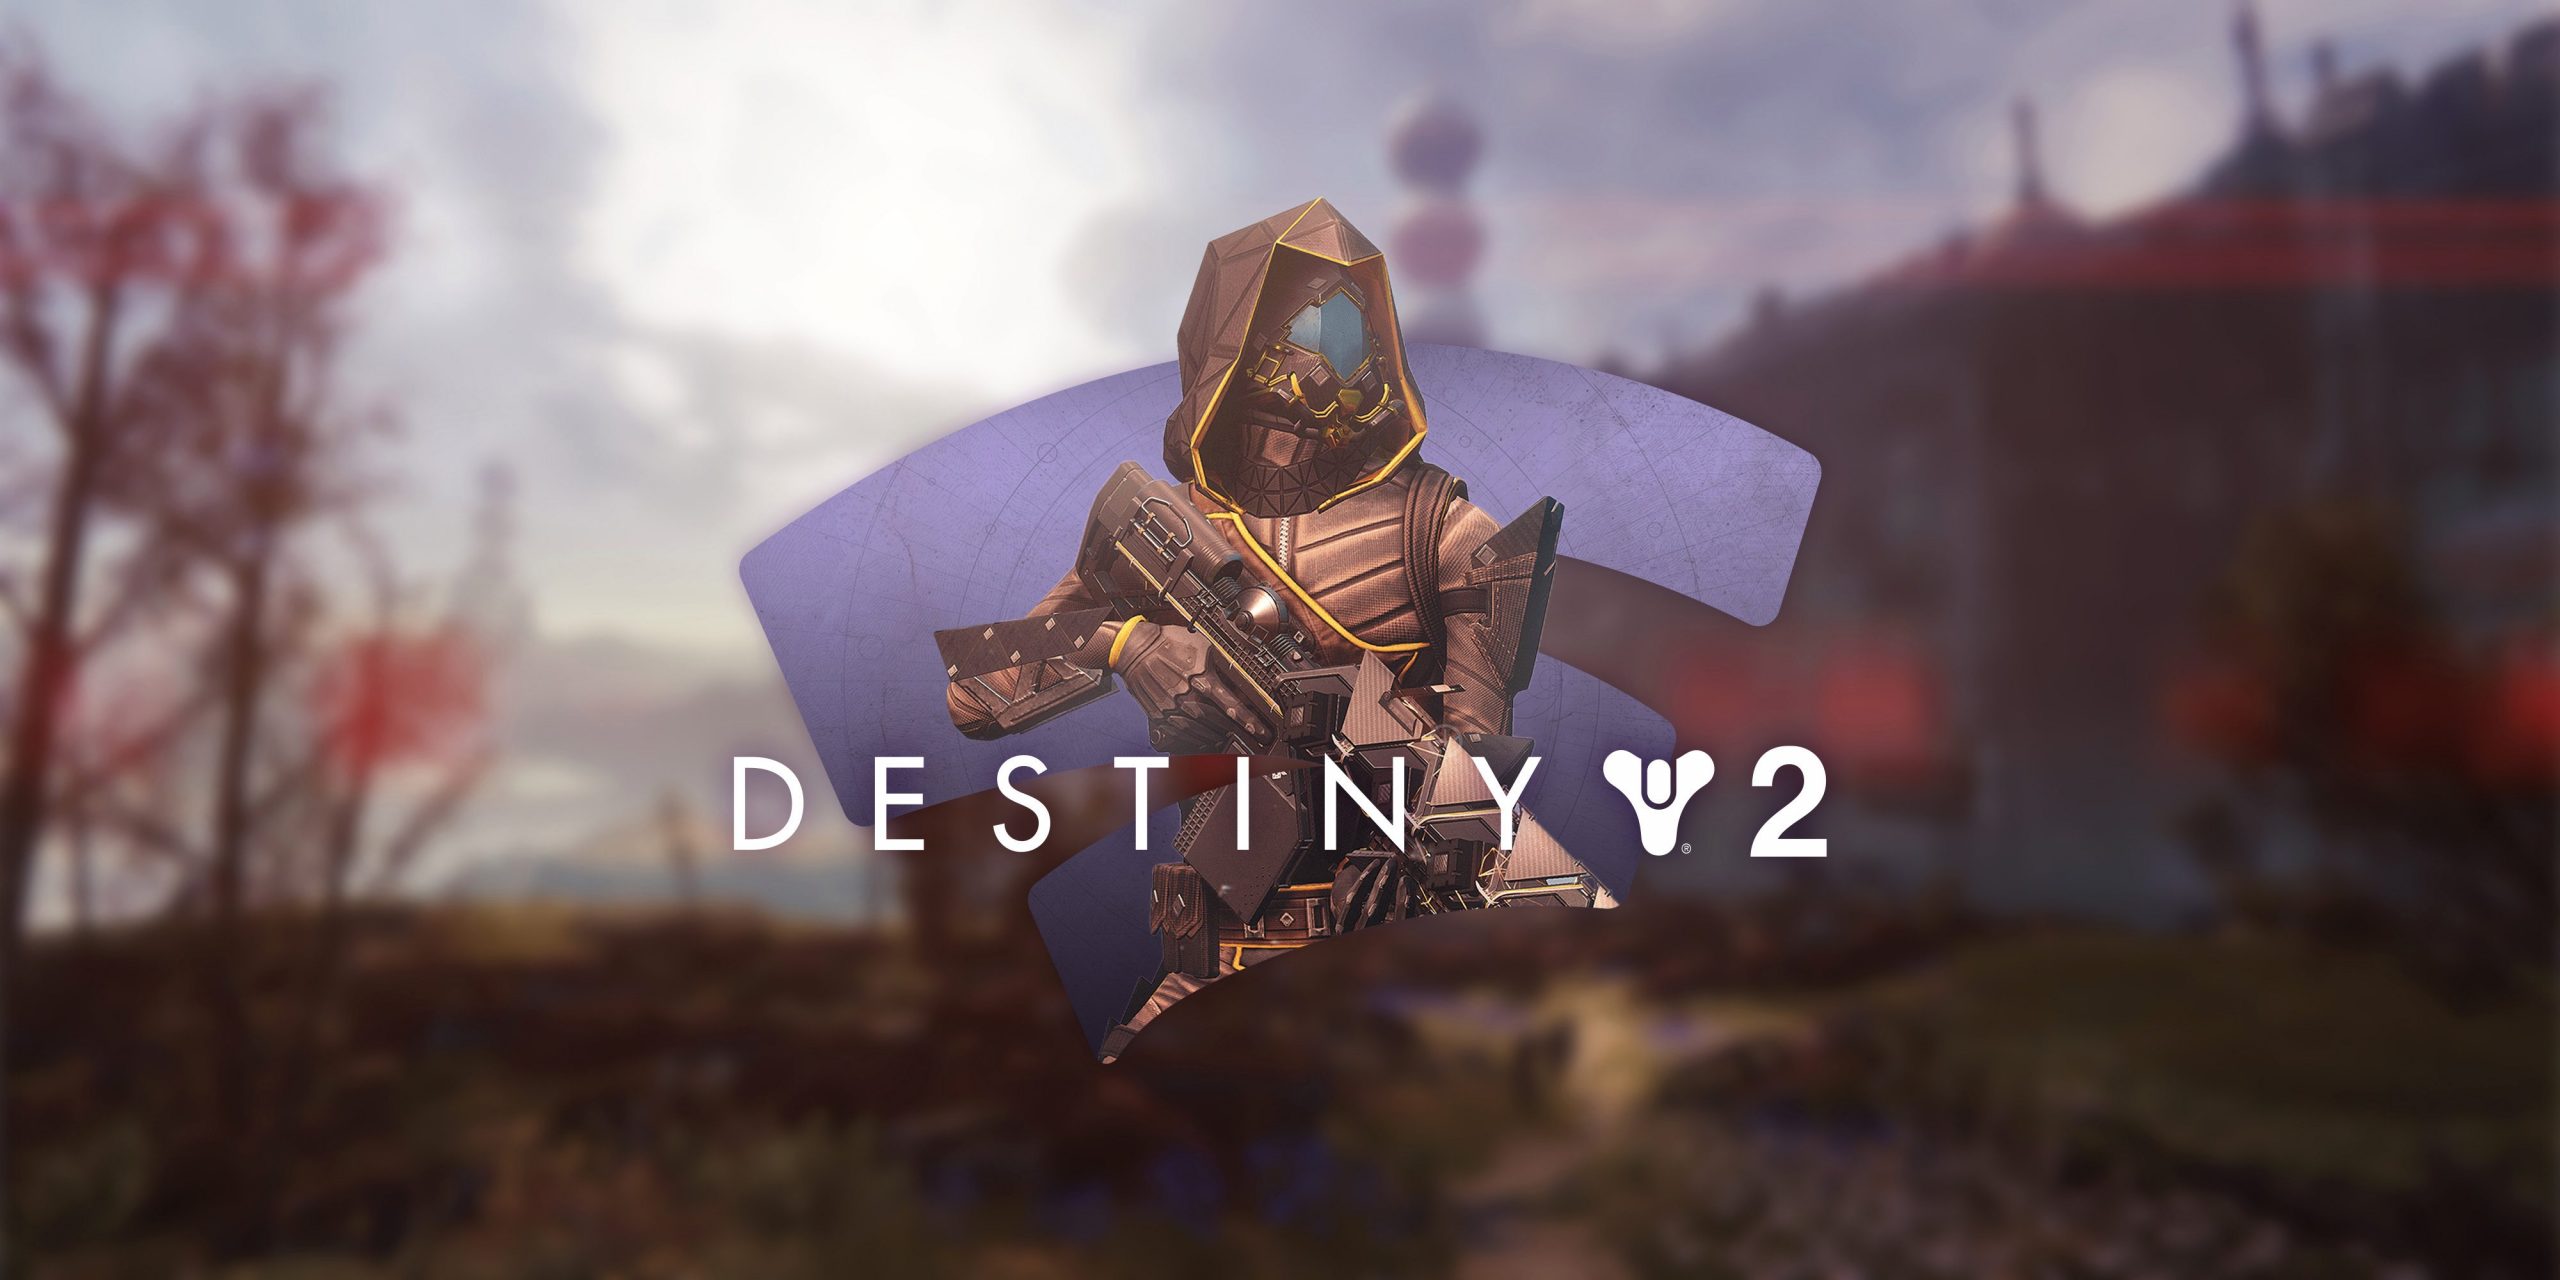 Destiny 2 PC Version Full Game Free Download